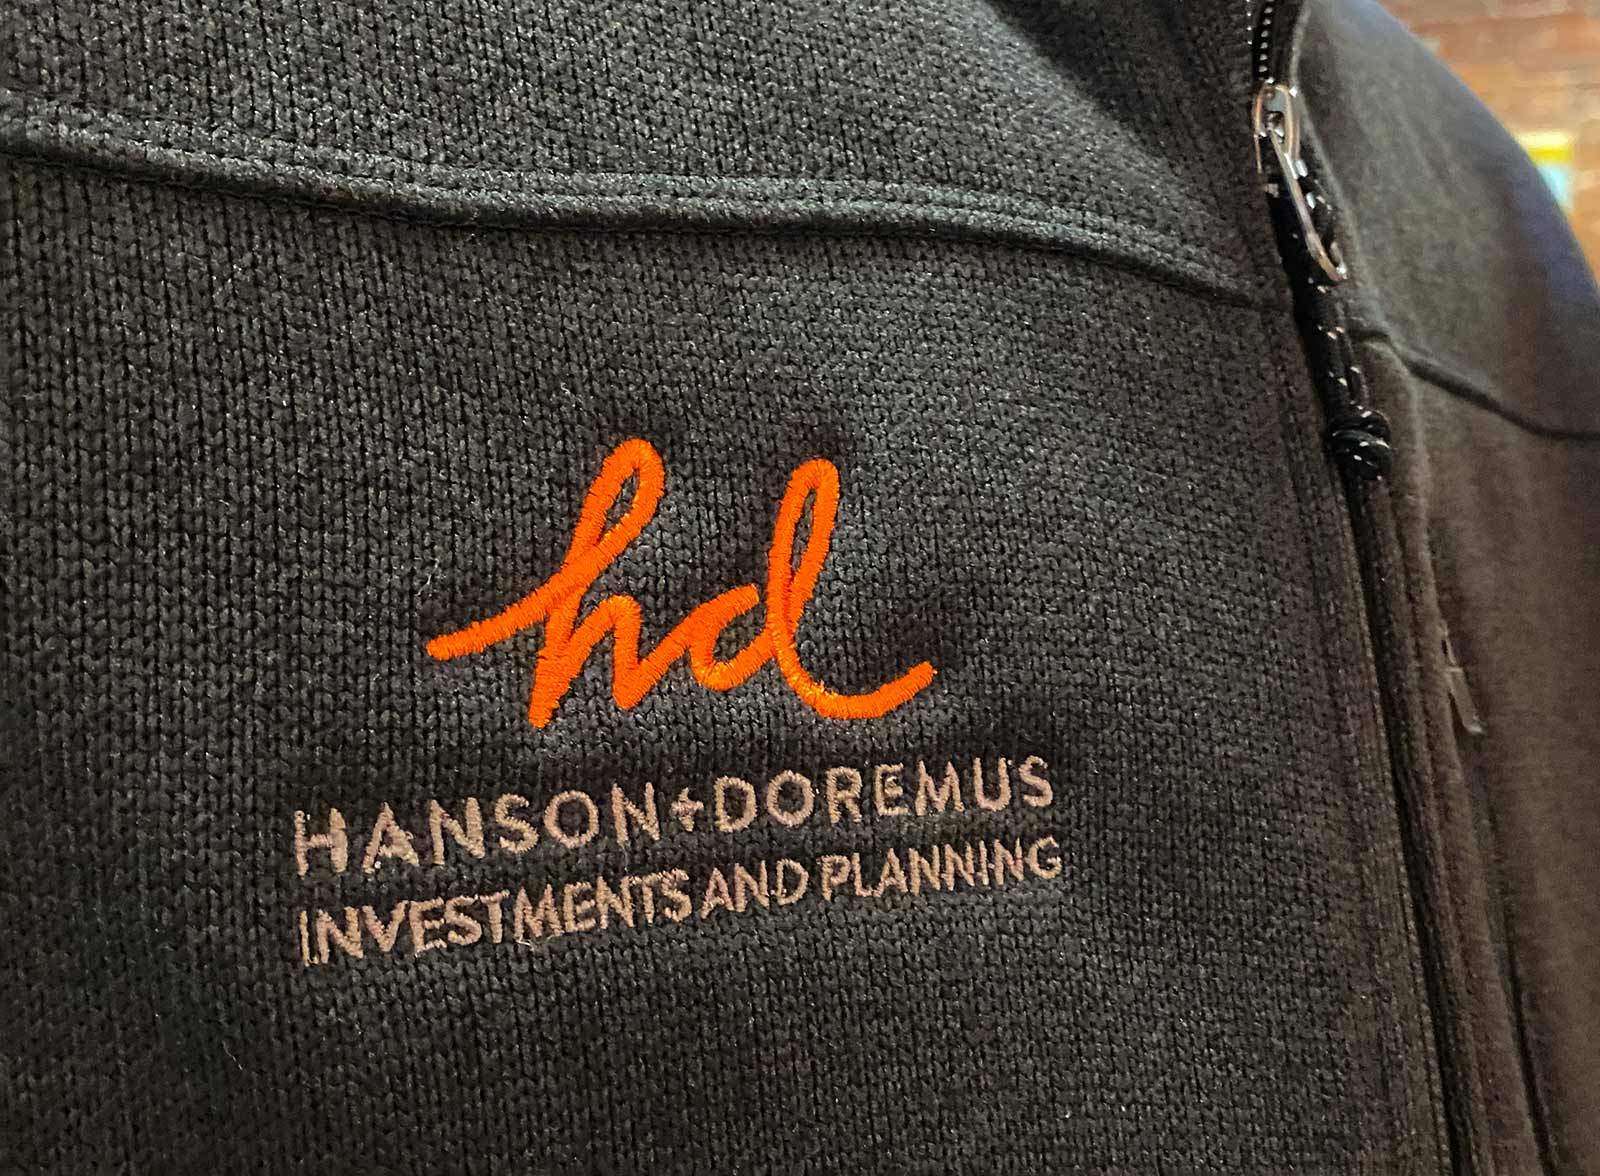 Hanson Doremus logo on a vest